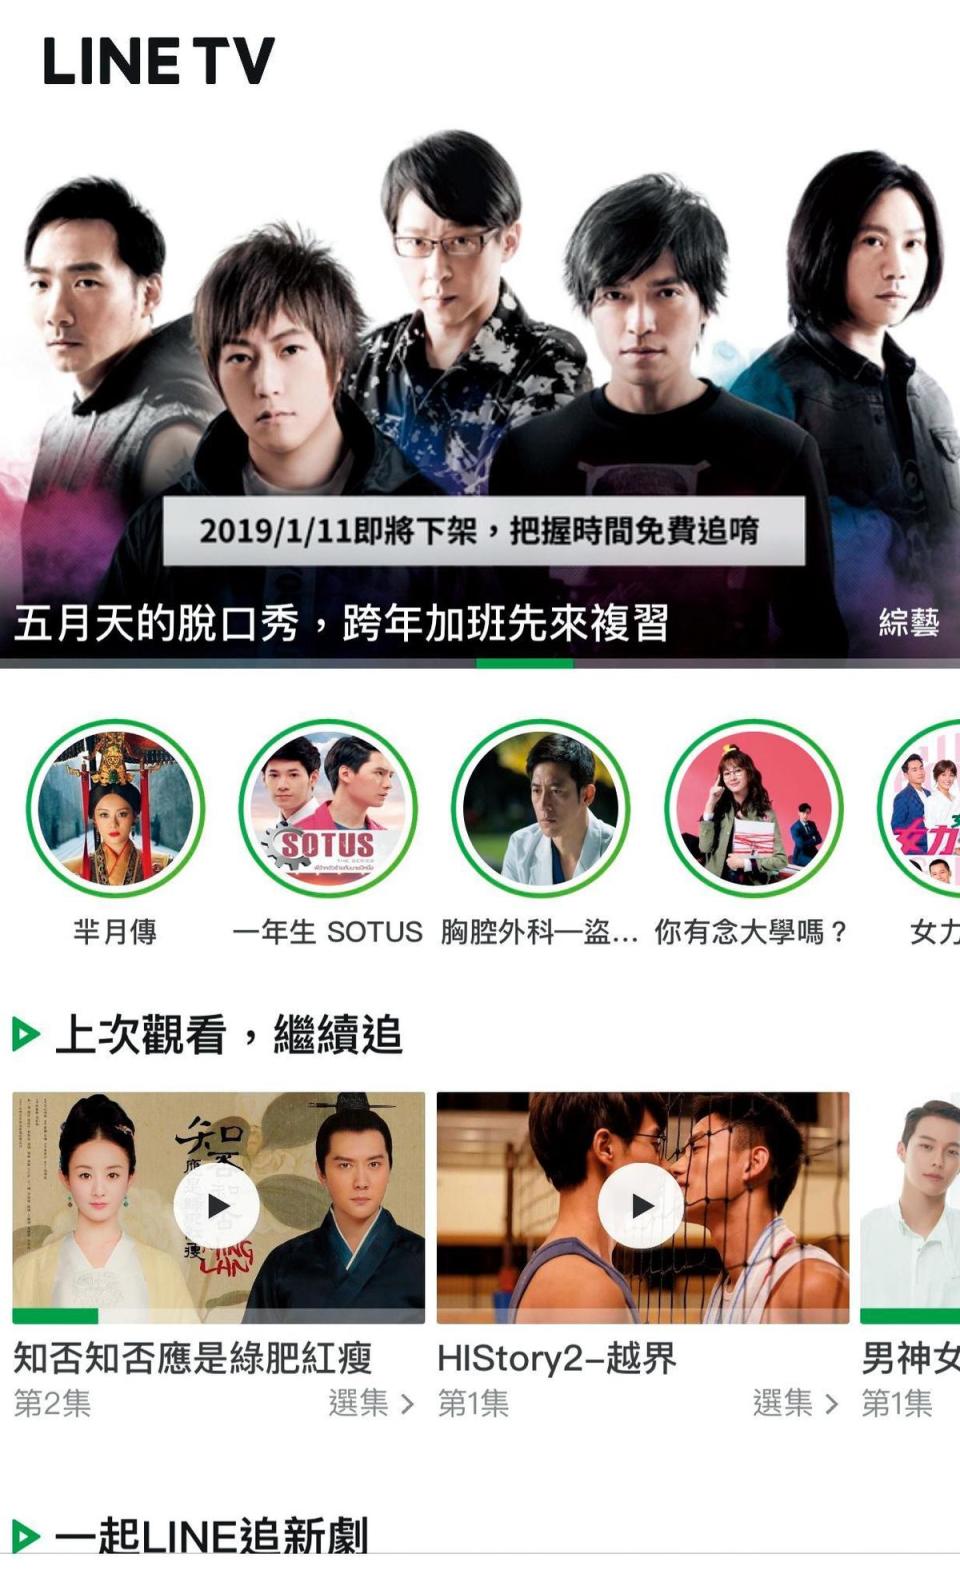 LINE TV投資CHOCO TV後，兩家合併為LINE TV擴大市占率，如今位居台灣App下載娛樂類排行第三名。